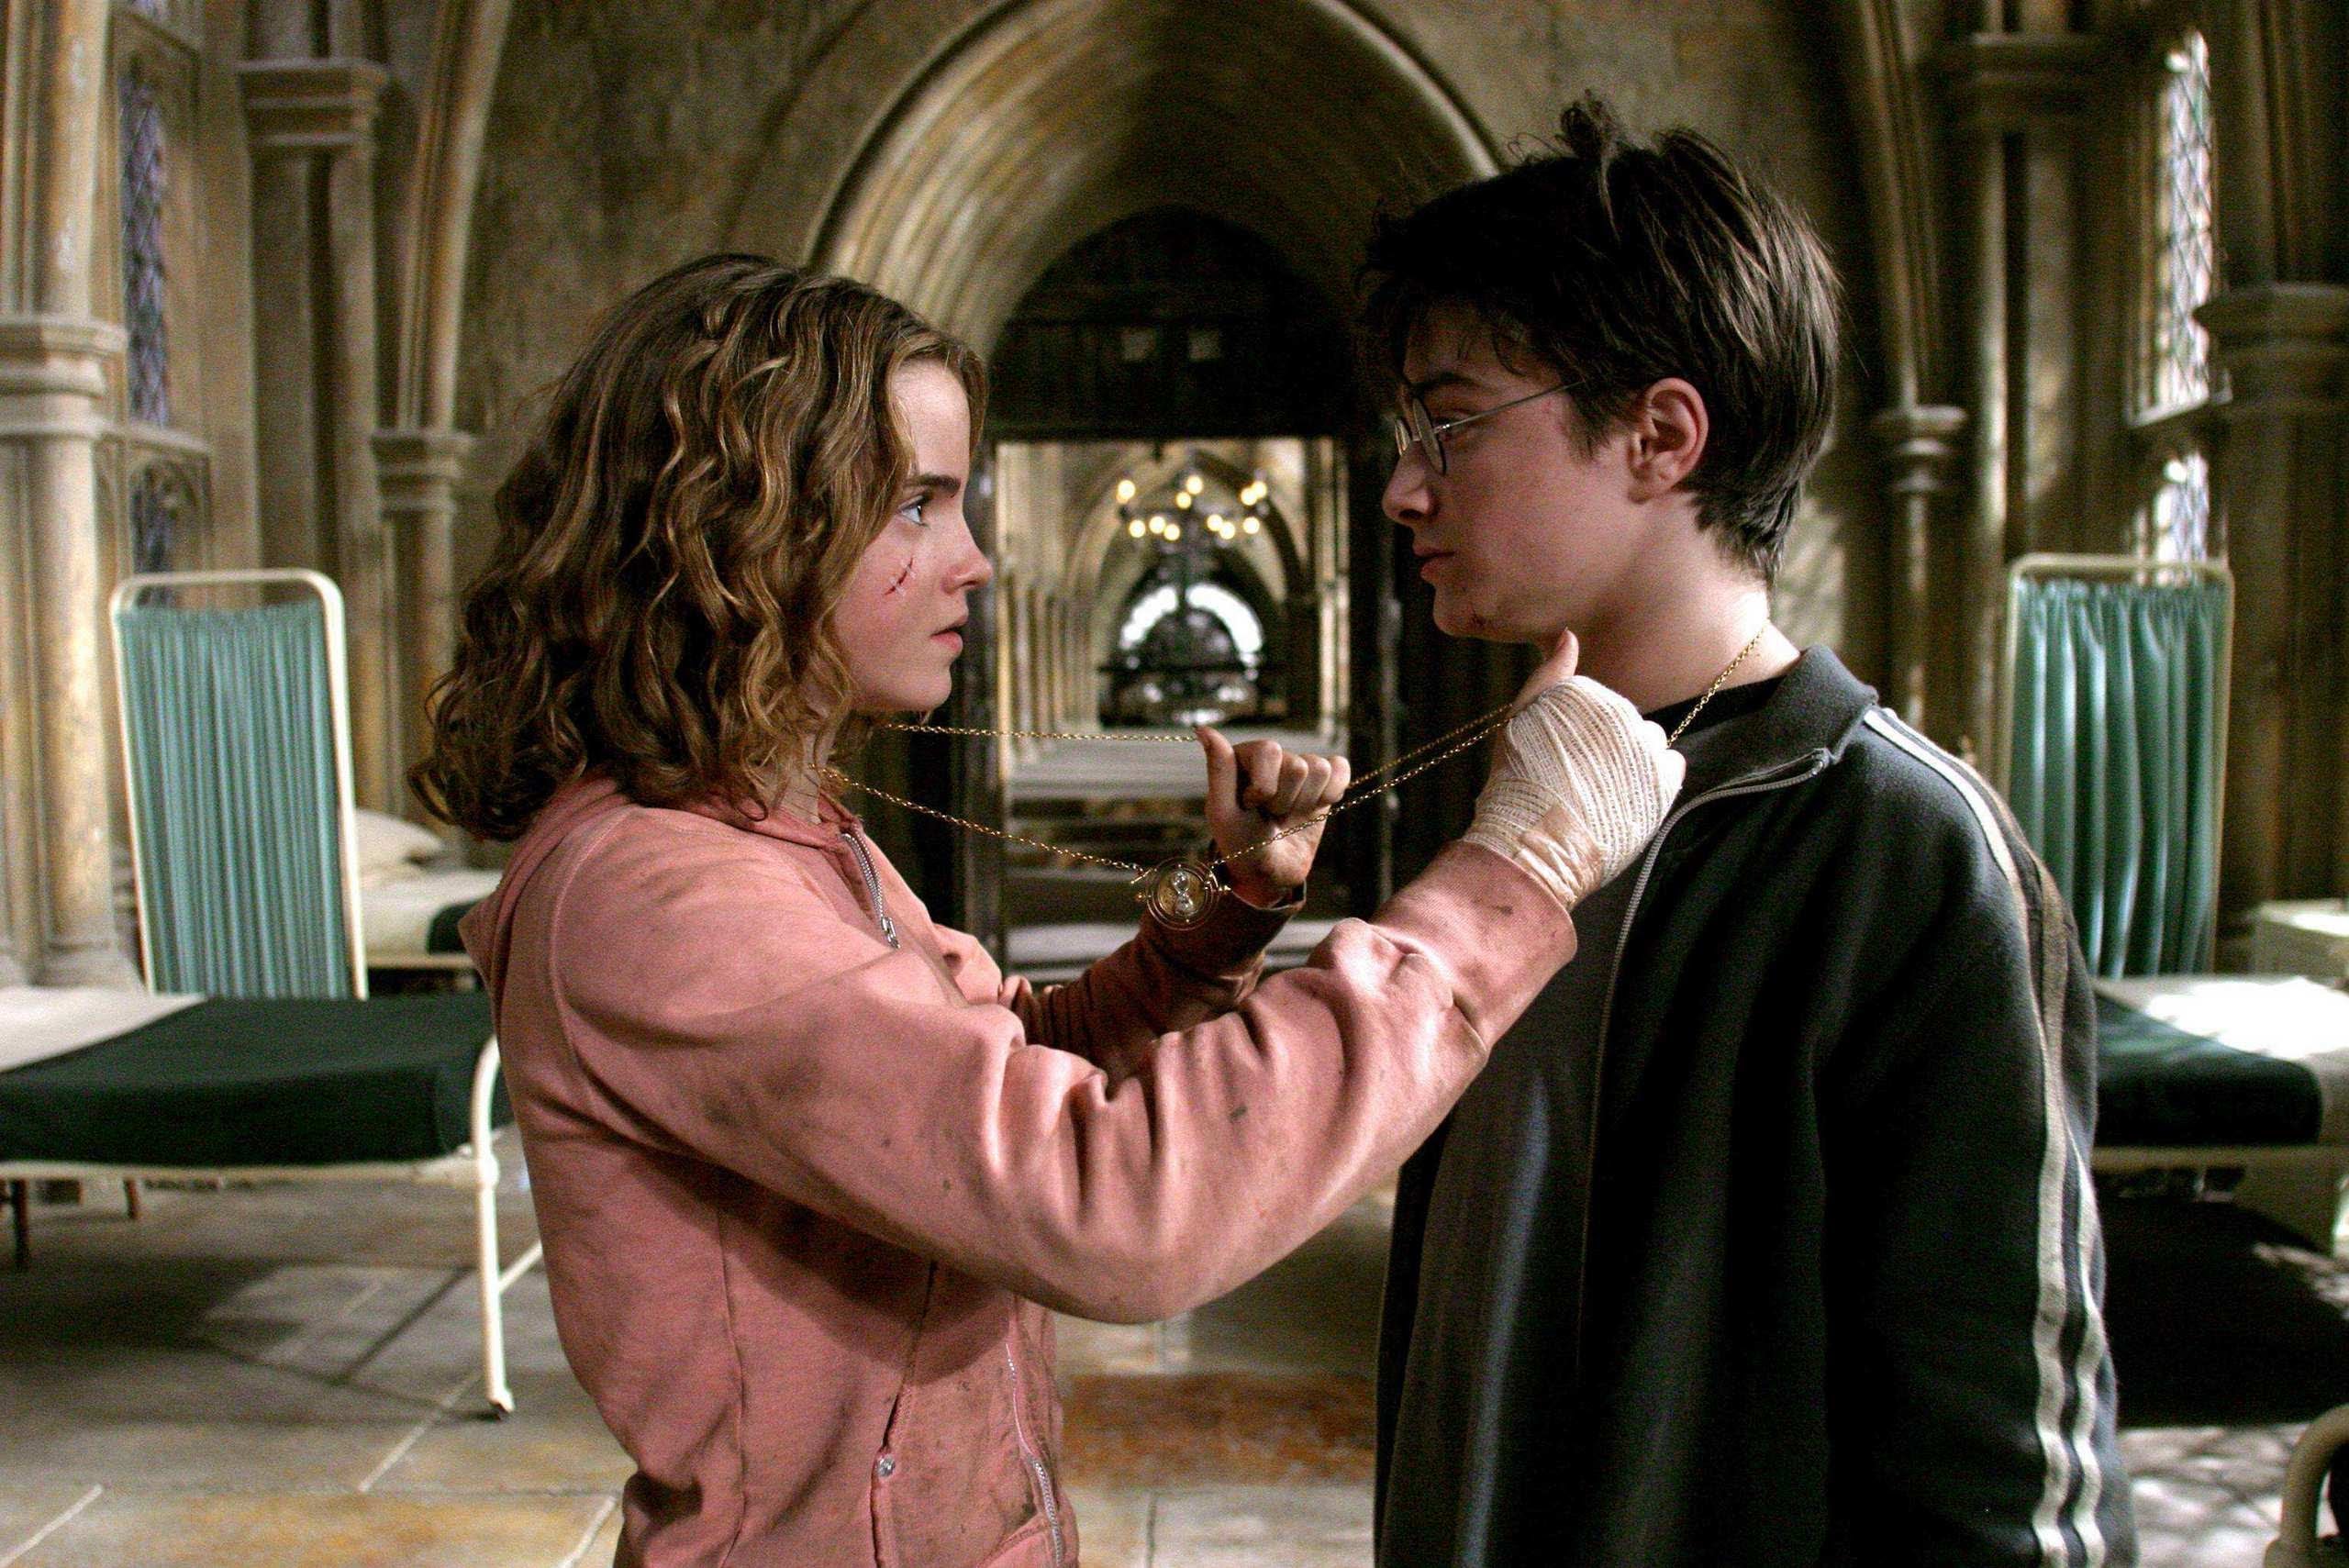  Objetos de Harry Potter que queremos que existan en el mundo real